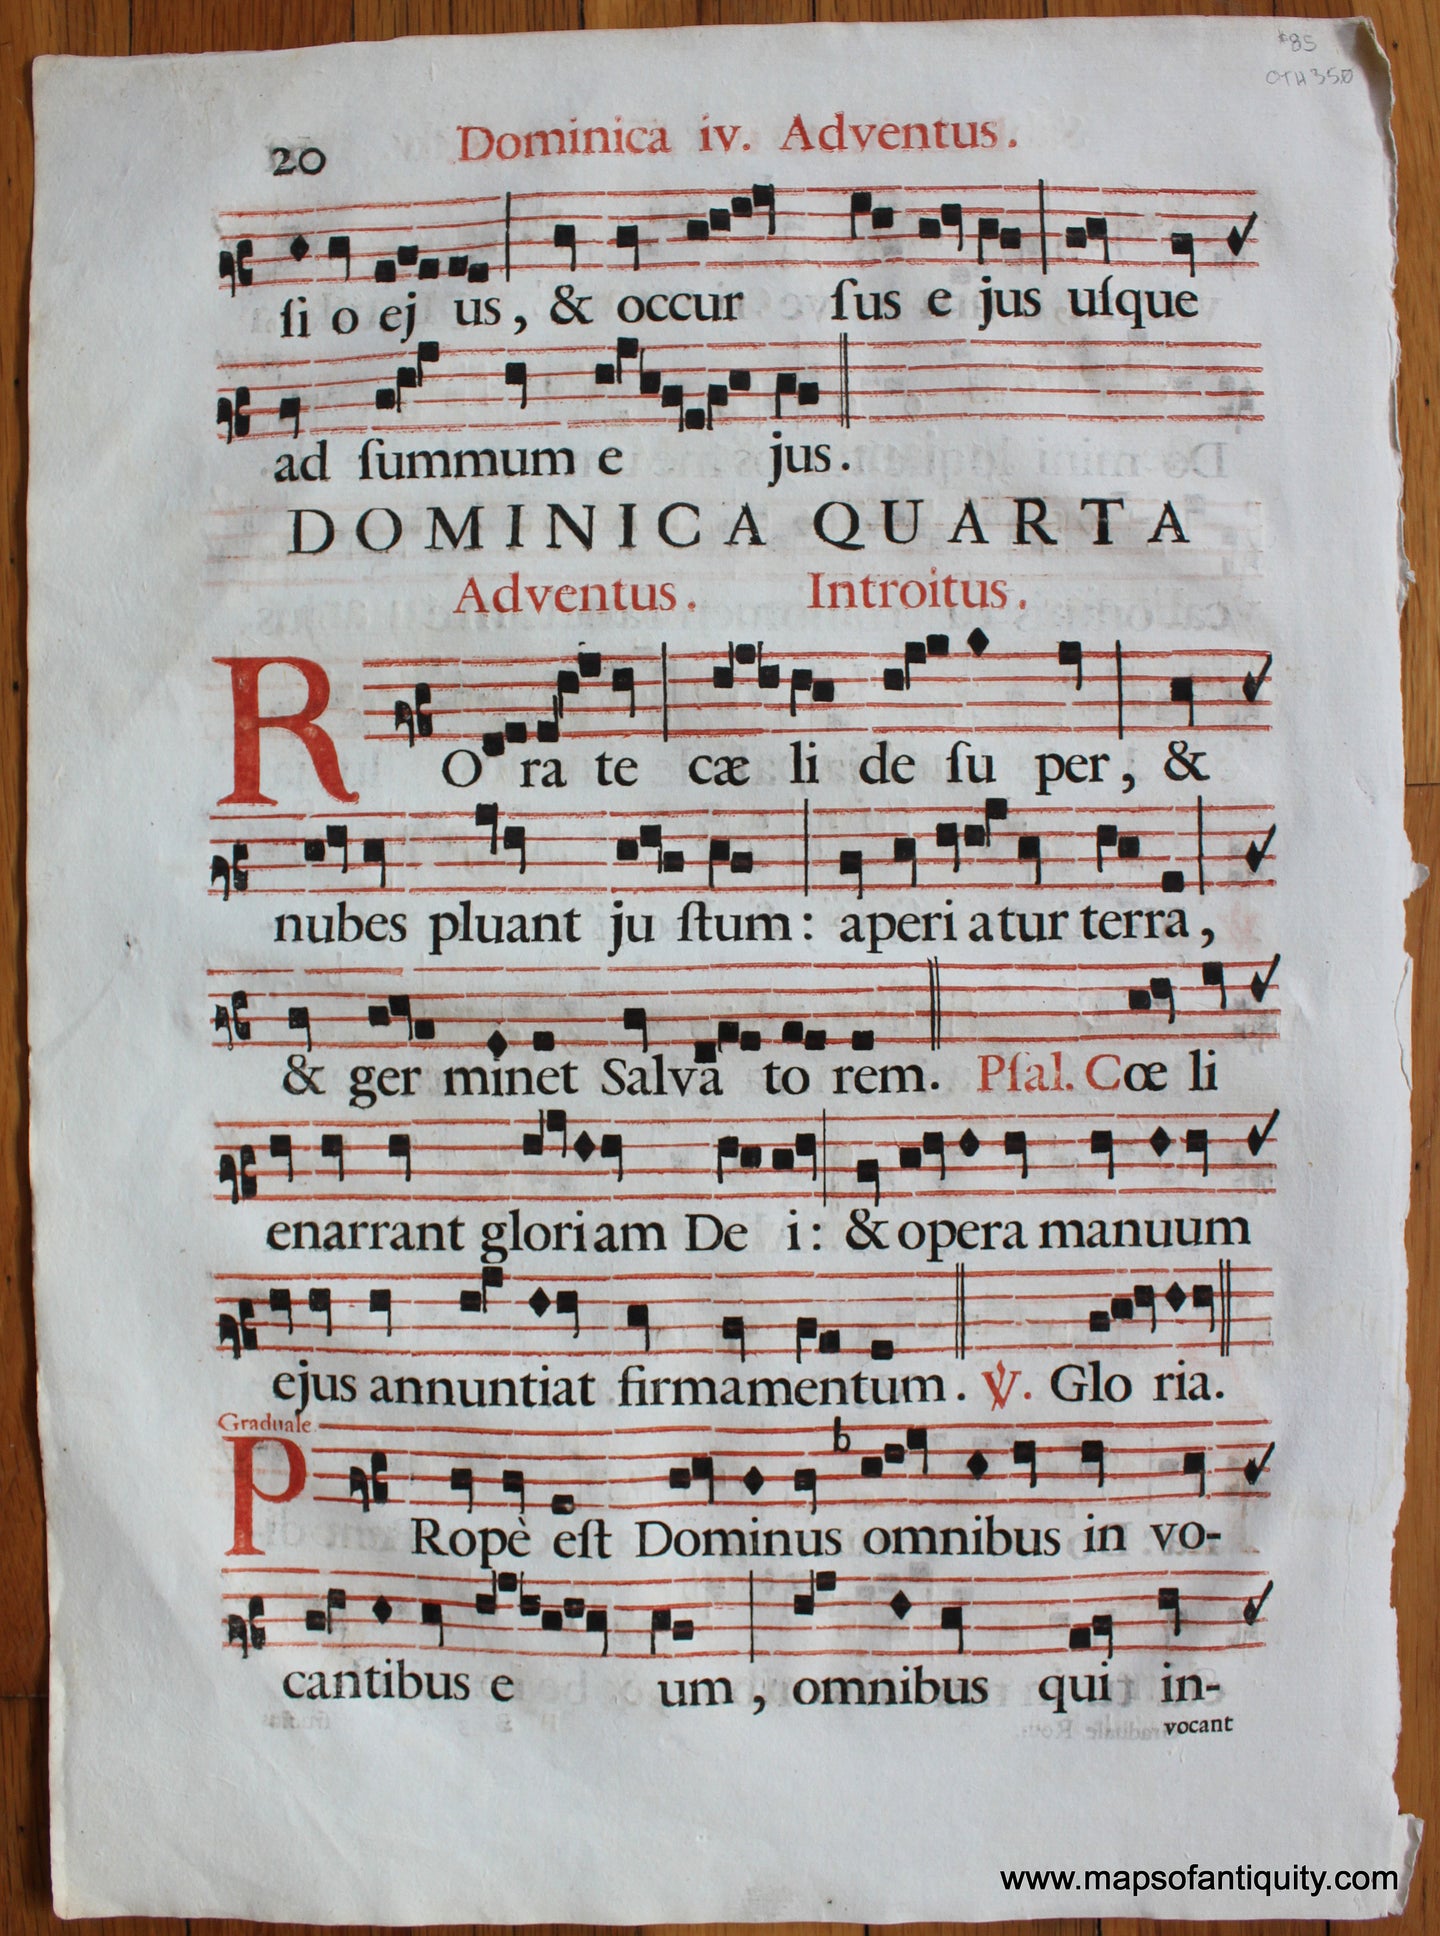 Antique-Sheet-Music-on-Paper-Antique-Sheet-Music-Sabbato-Quatuor-Temp.-Adv.-c.-16th-century-Unknown-Antique-Sheet-Music-1500s-16th-century-Maps-of-Antiquity